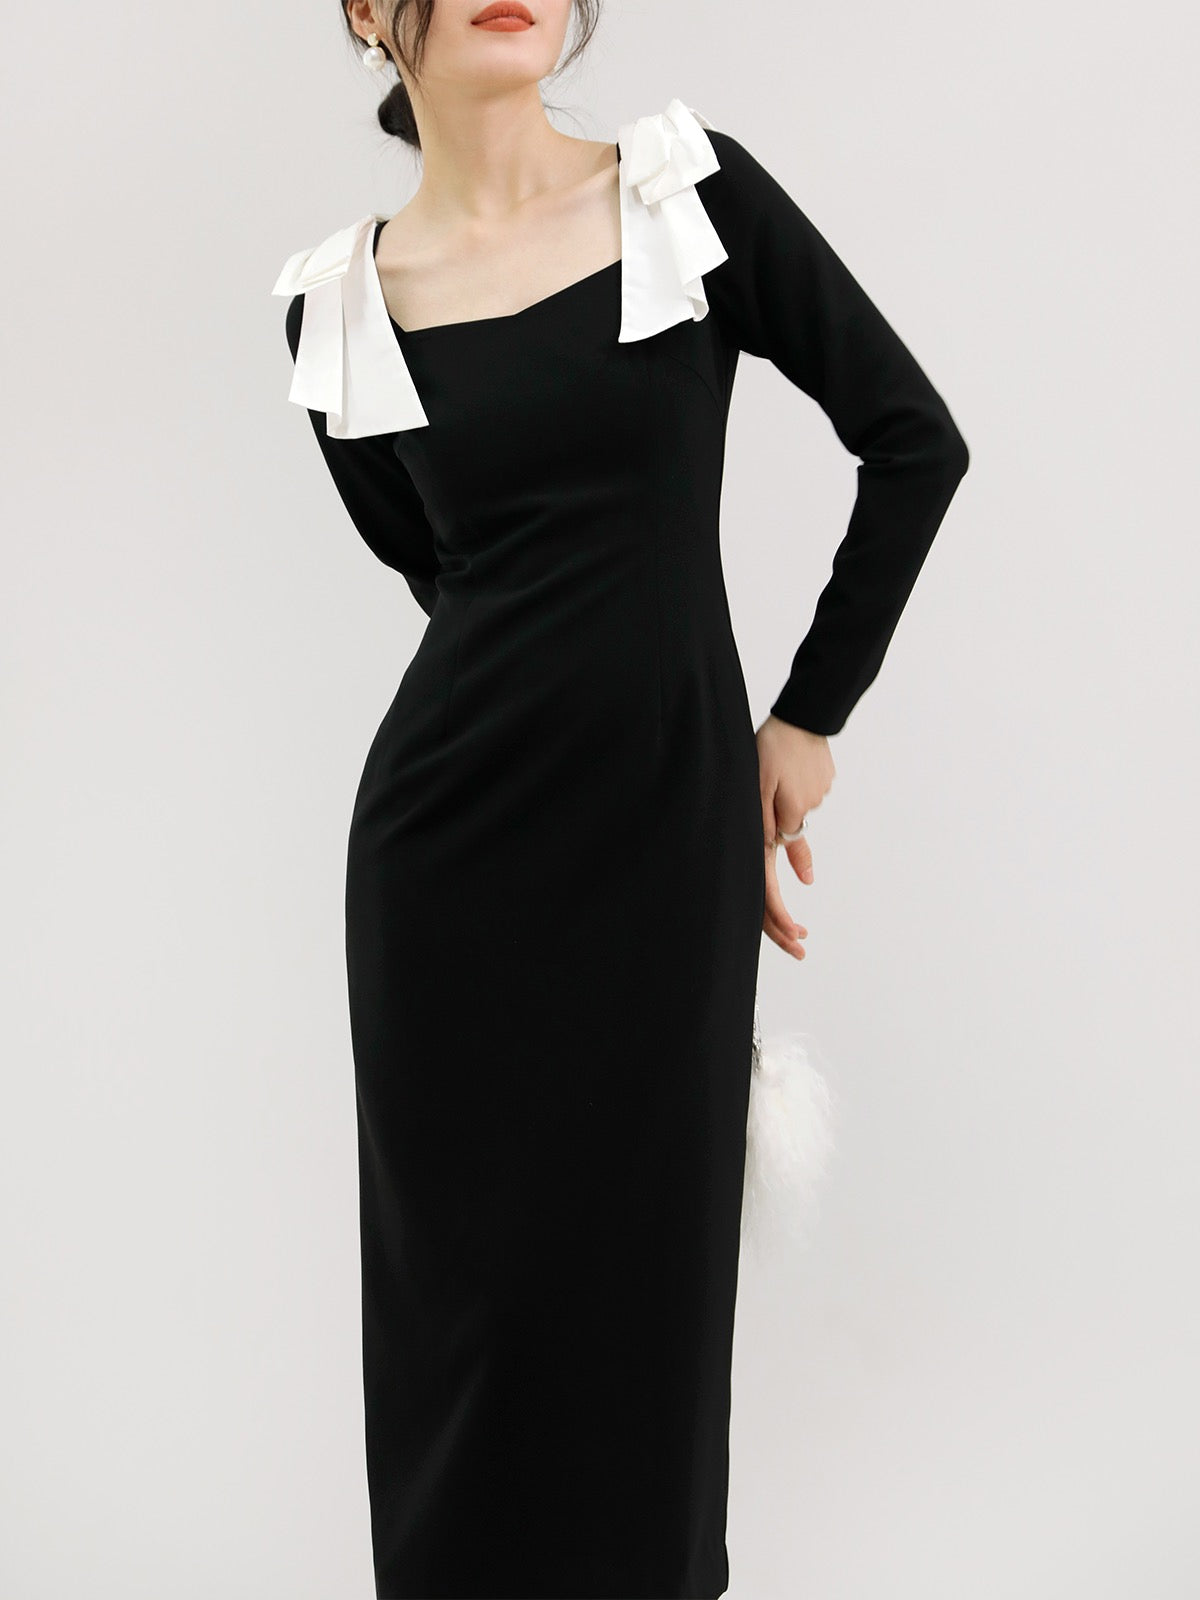 Formal Dress: 61377. Long, Plunging Neckline, Straight | Alyce Paris